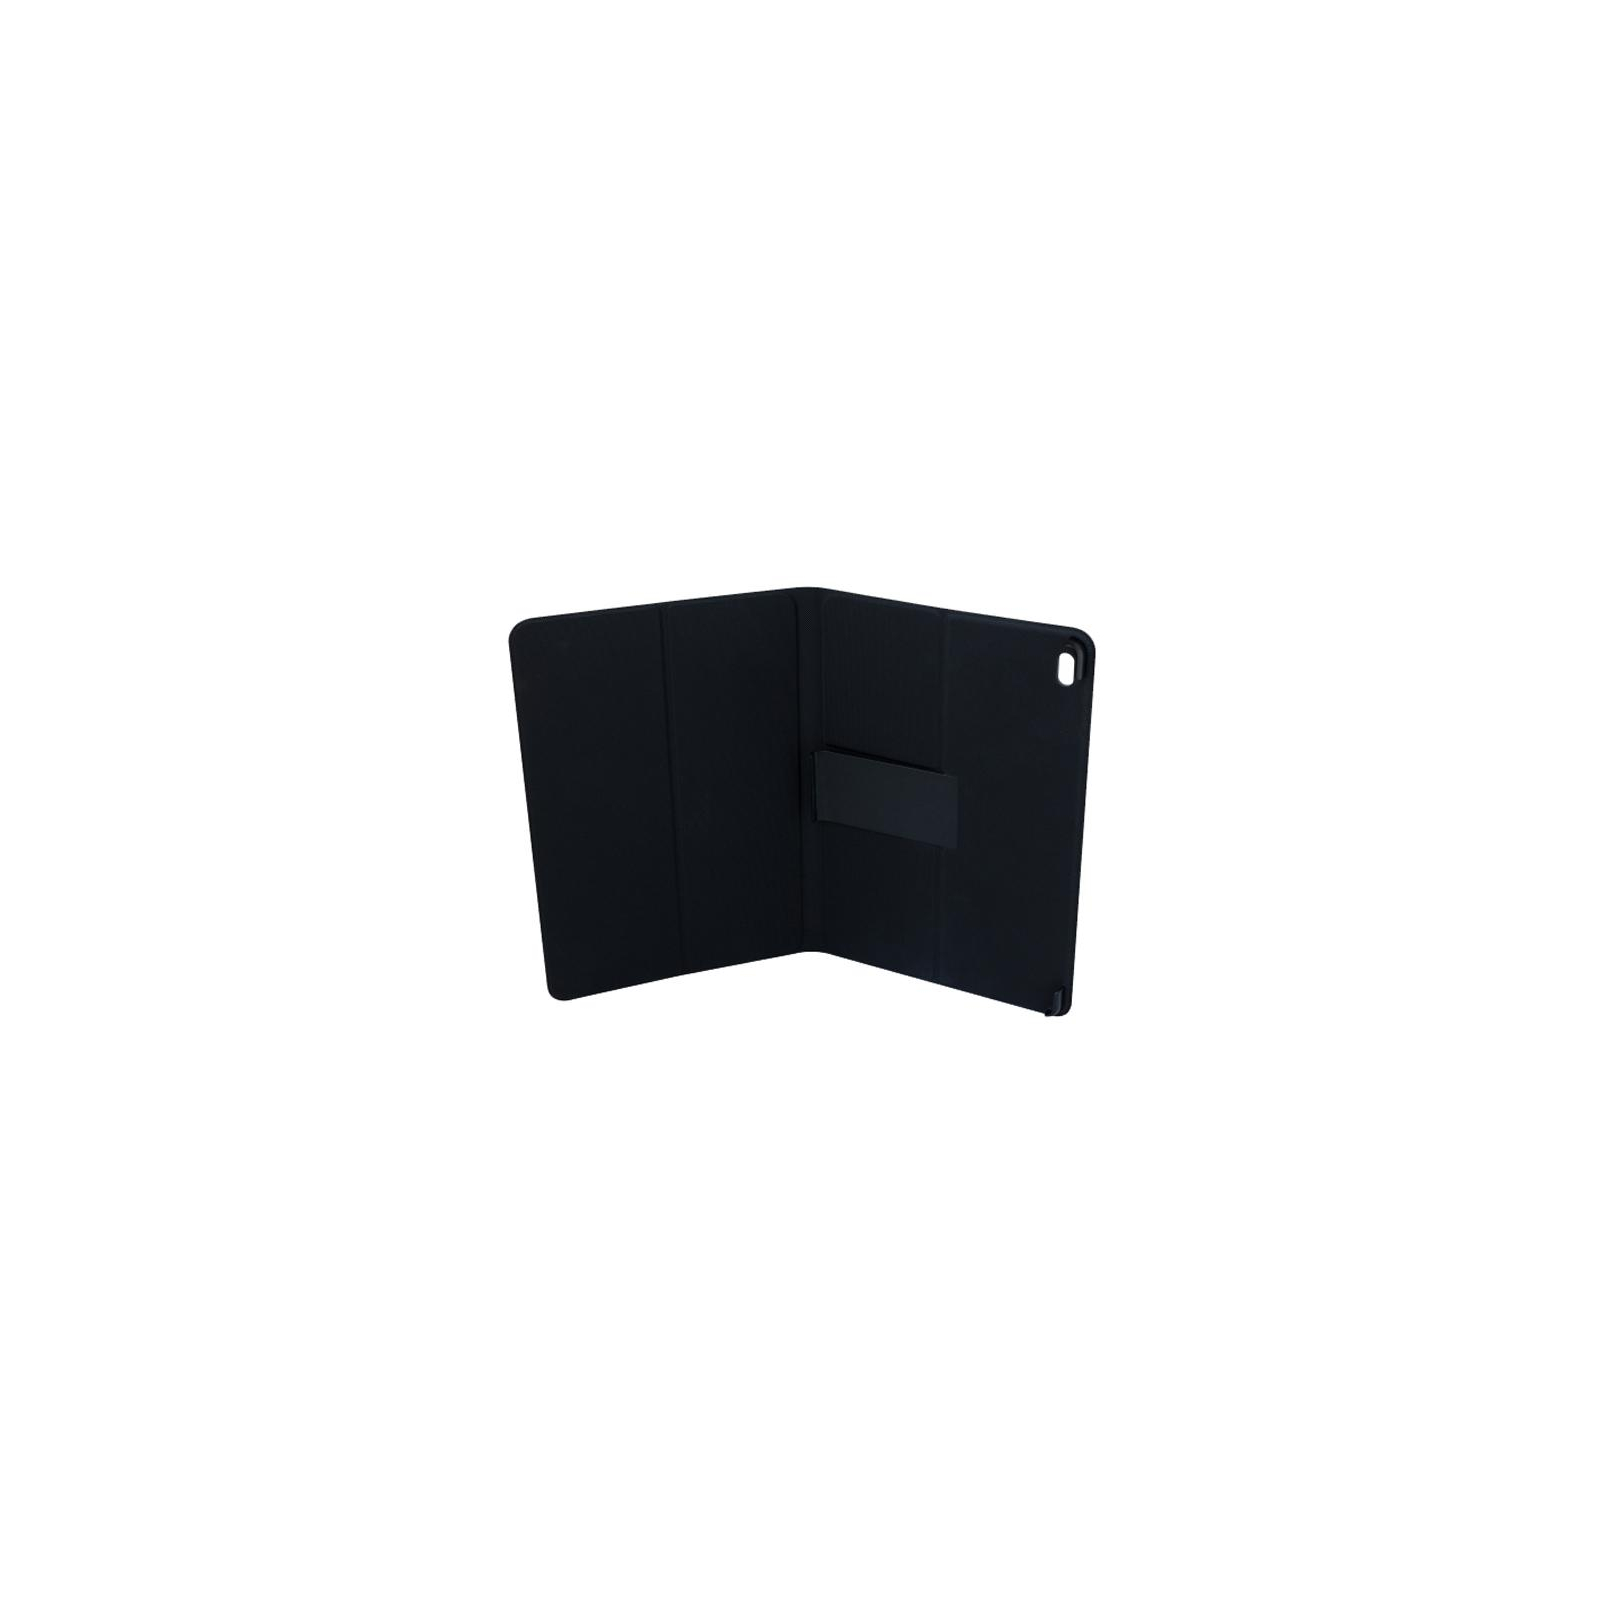 Чехол для планшета Lenovo 10" TB-X104 Black TAB E10 Folio Case (ZG38C02703) изображение 3